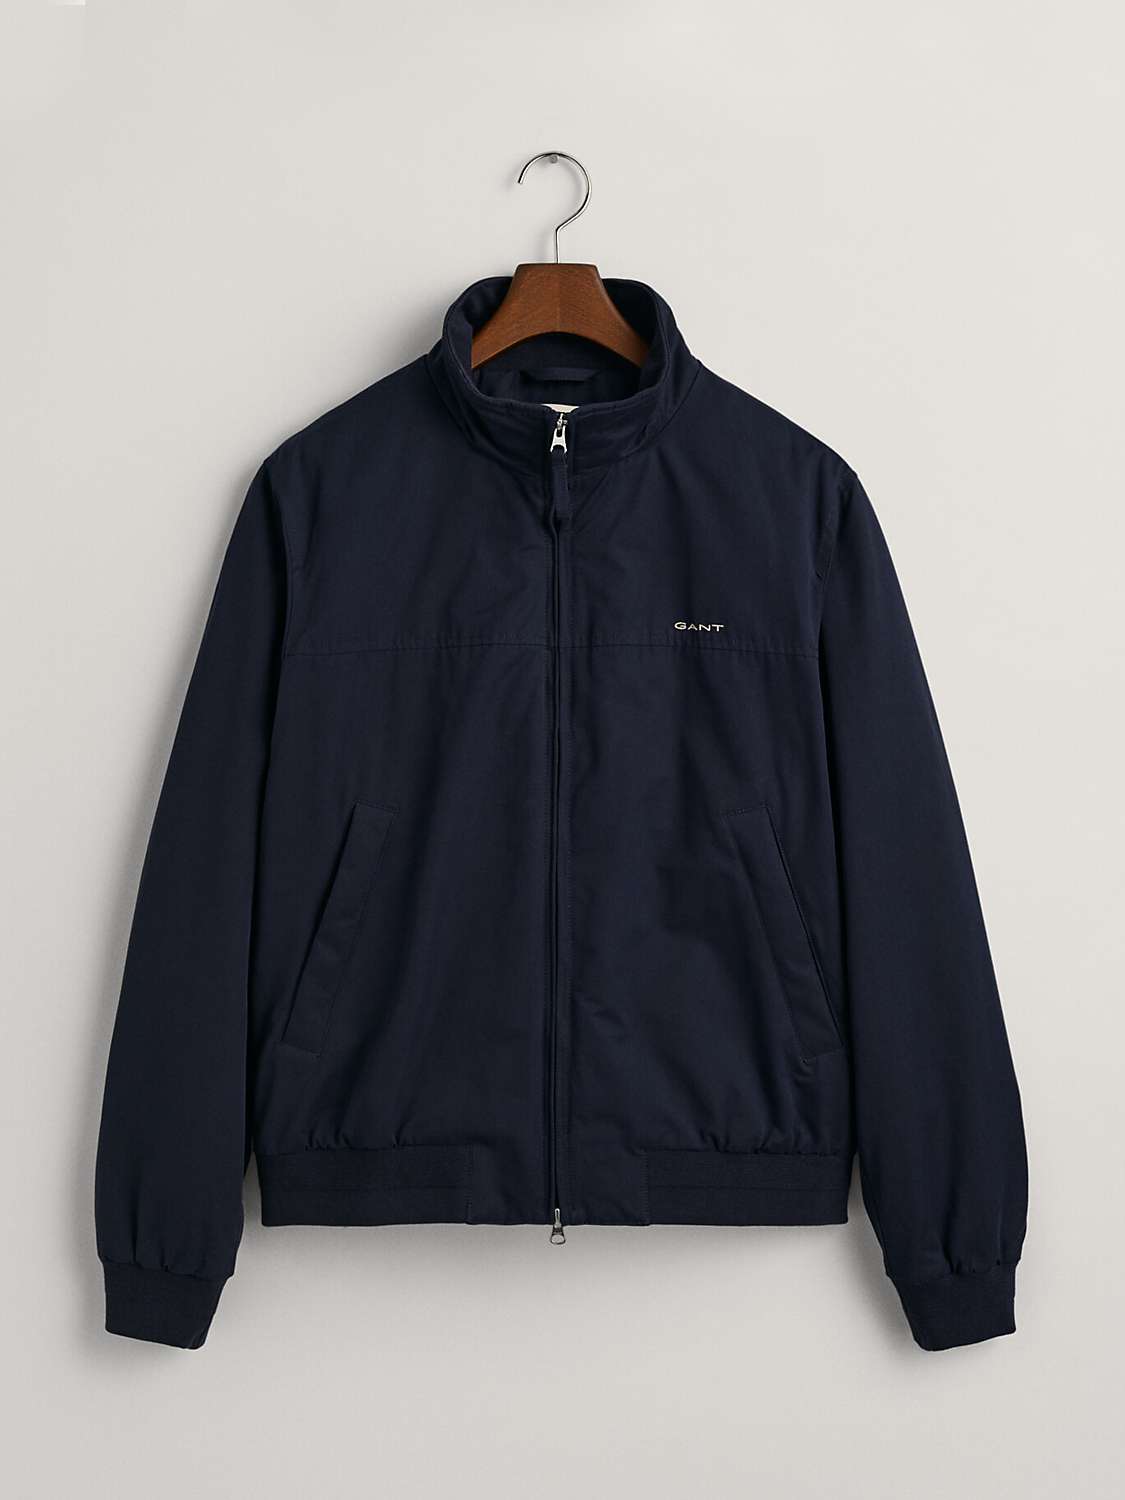 Buy GANT Hampshire Jacket, Navy Online at johnlewis.com